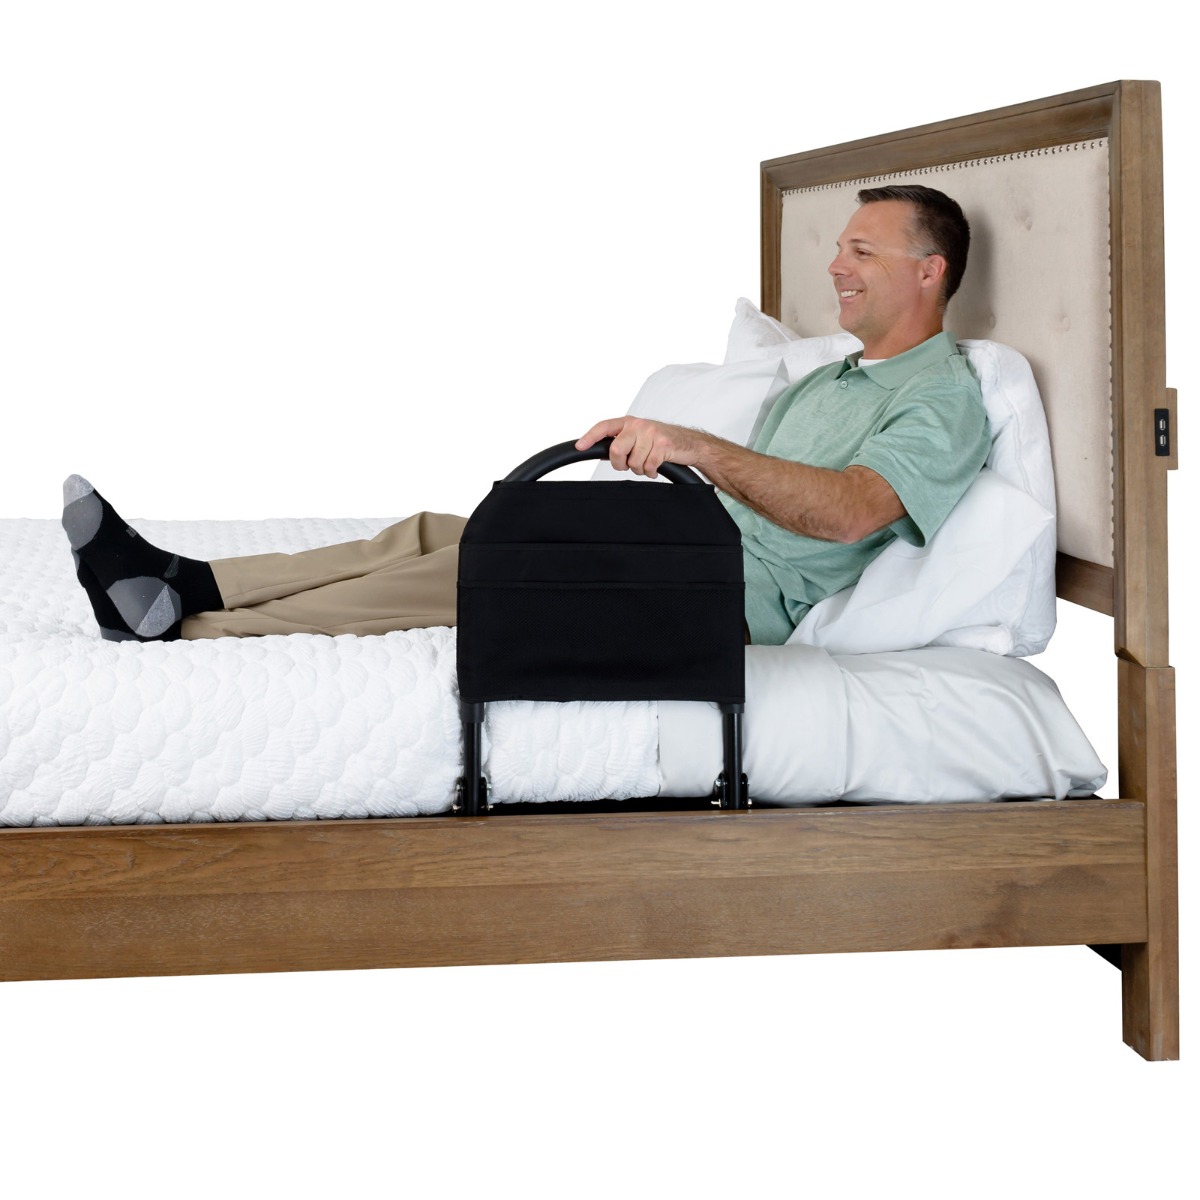 Bed Rail Advantage Traveler